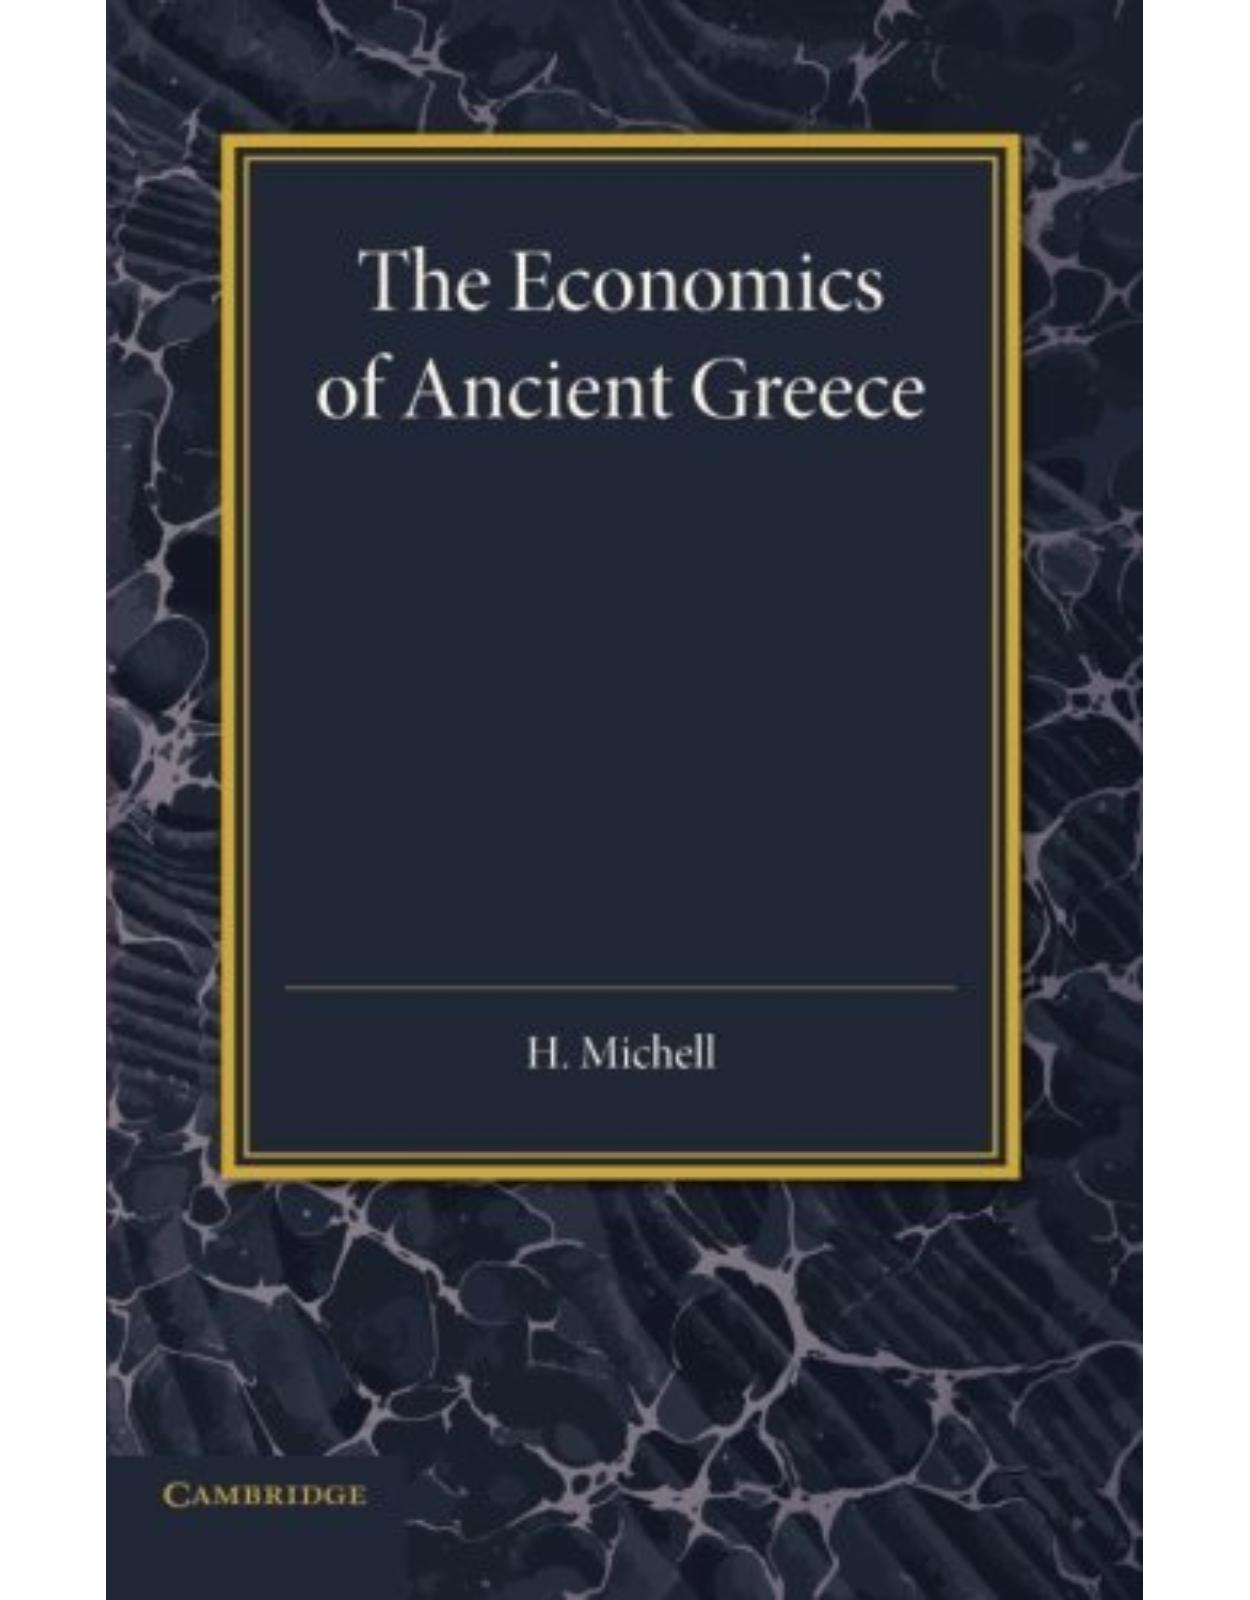 The Economics of Ancient Greece